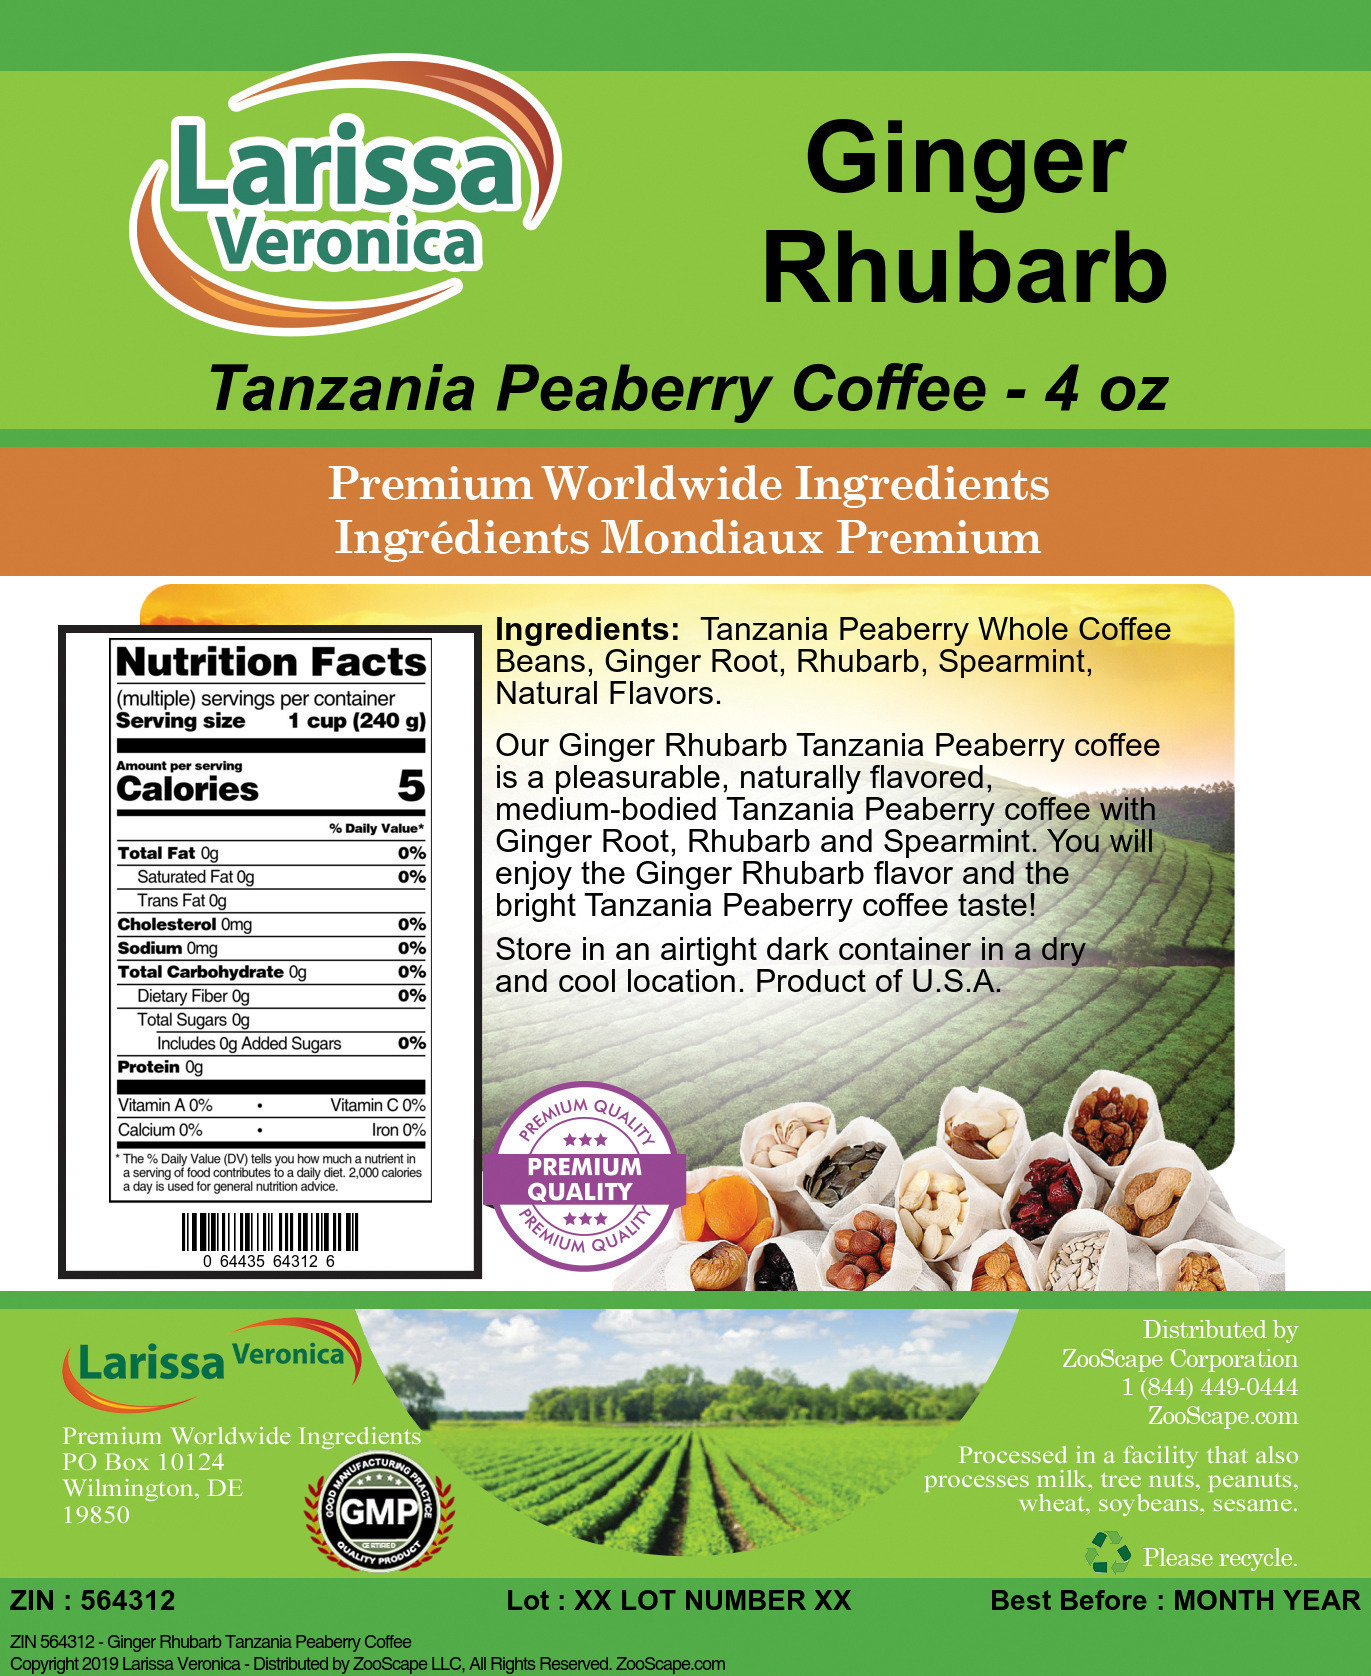 Ginger Rhubarb Tanzania Peaberry Coffee - Label